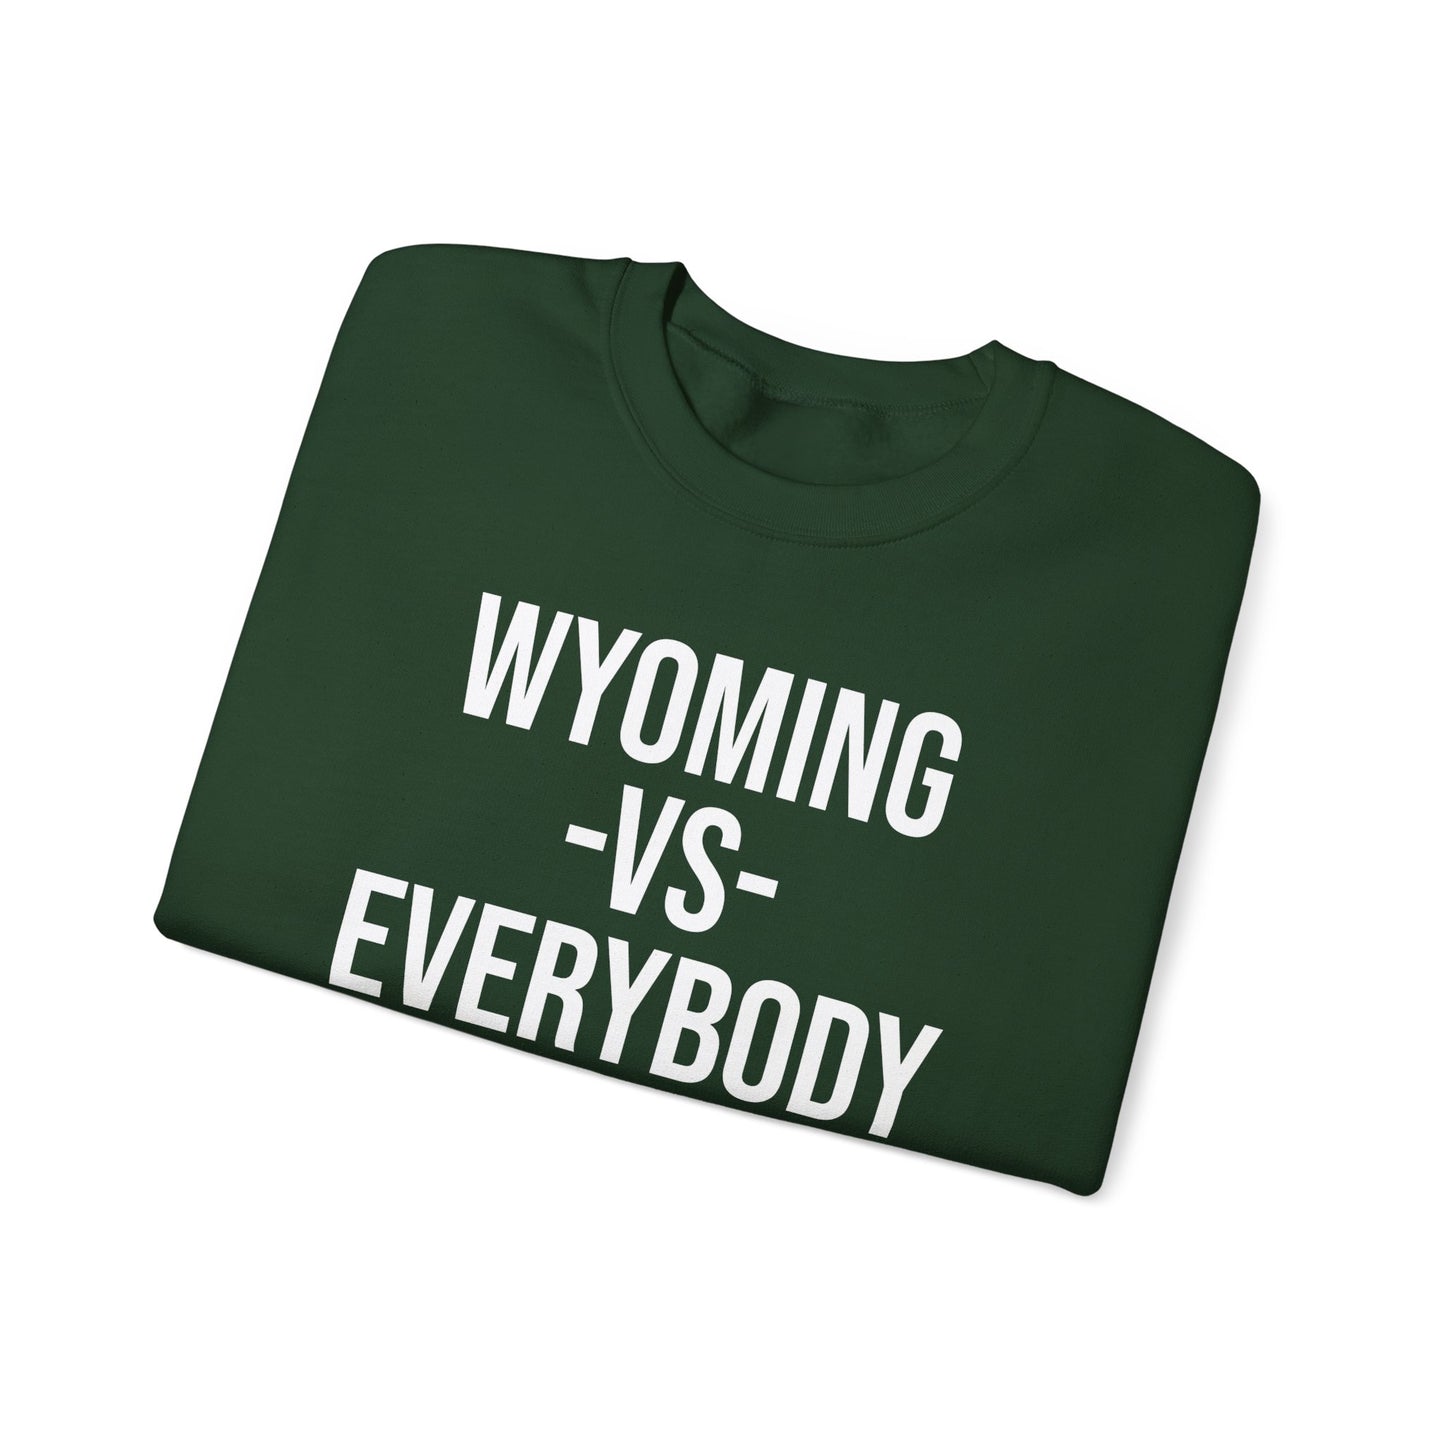 Wyoming  -VS - Everybody Unisex Heavy Blend™ Crewneck Sweatshirt